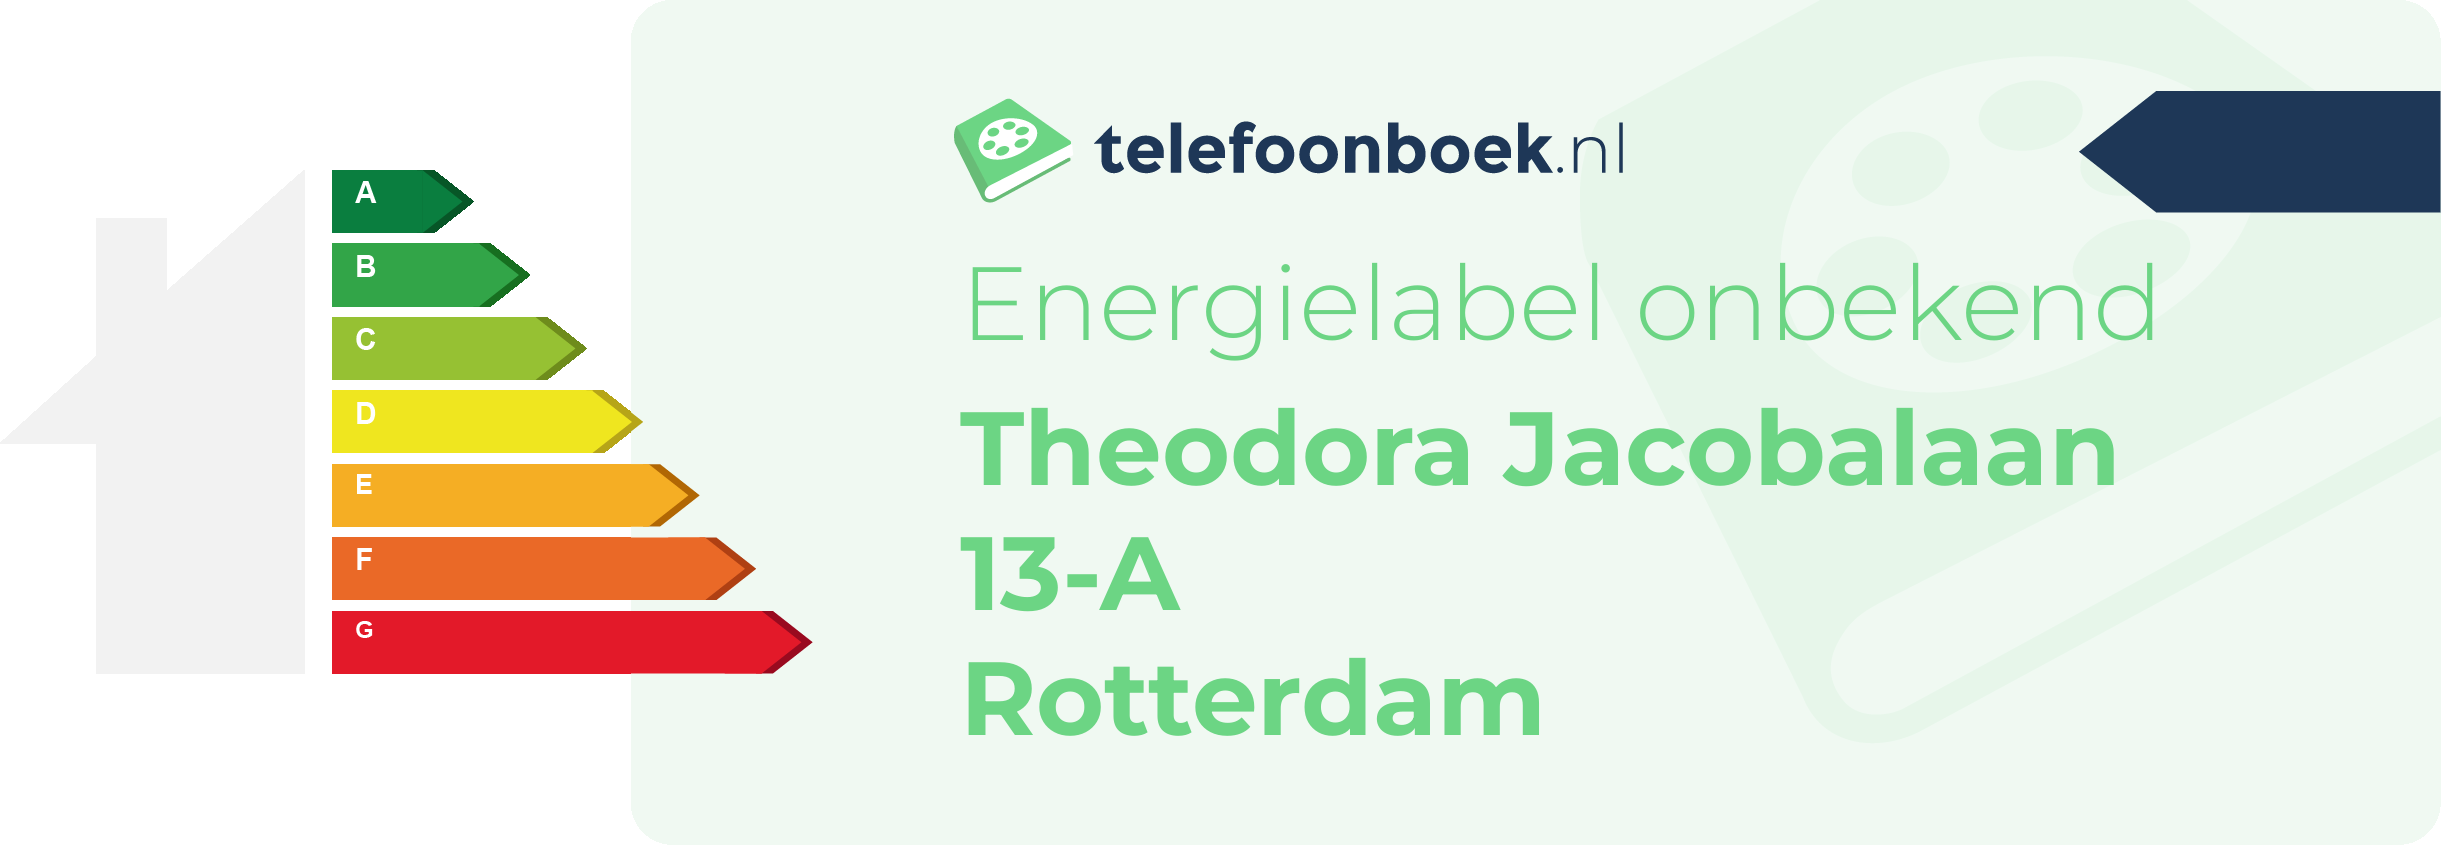 Energielabel Theodora Jacobalaan 13-A Rotterdam